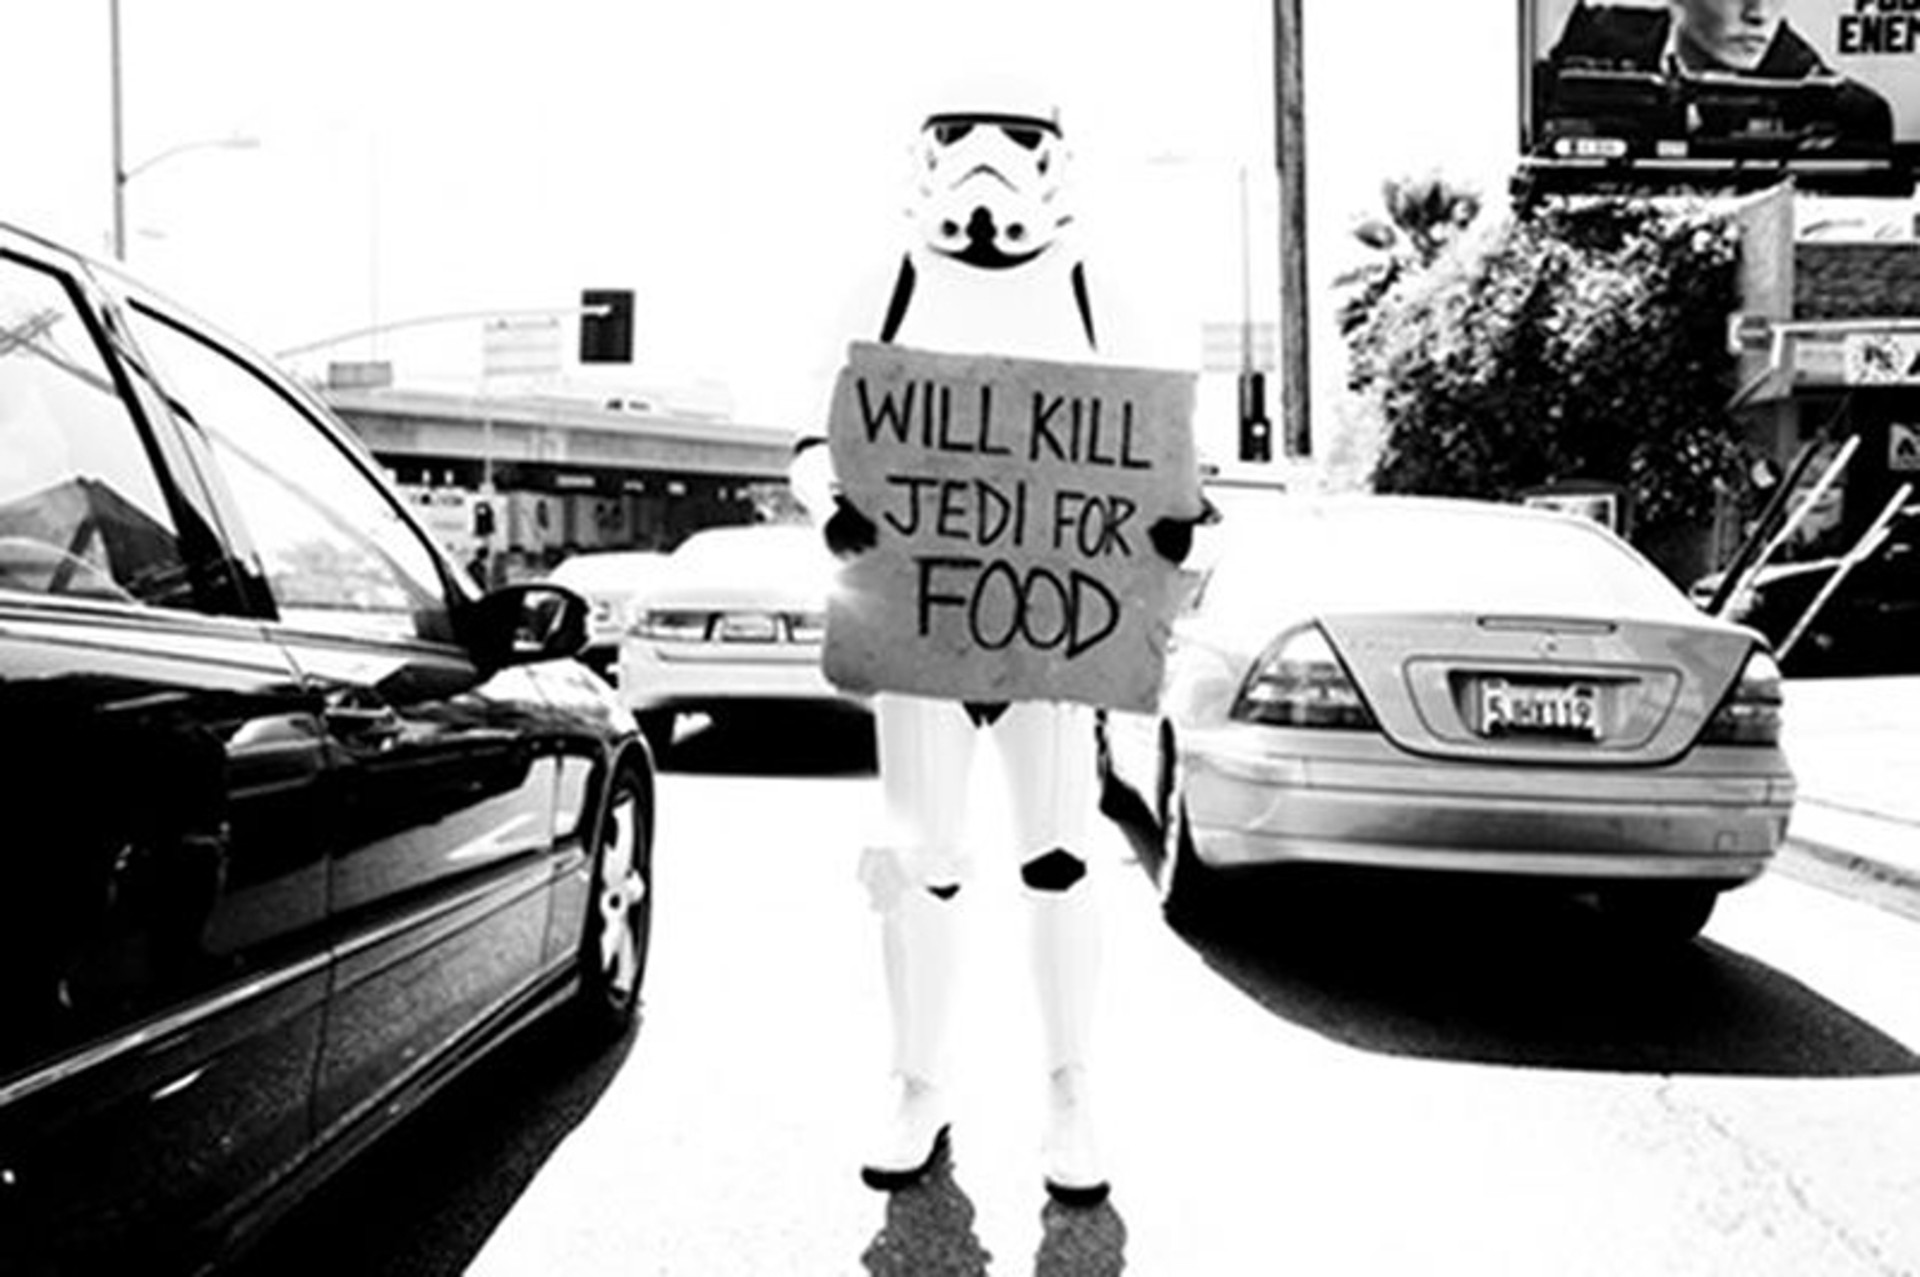 Will Kill Jedi For Food by Tyler Shields